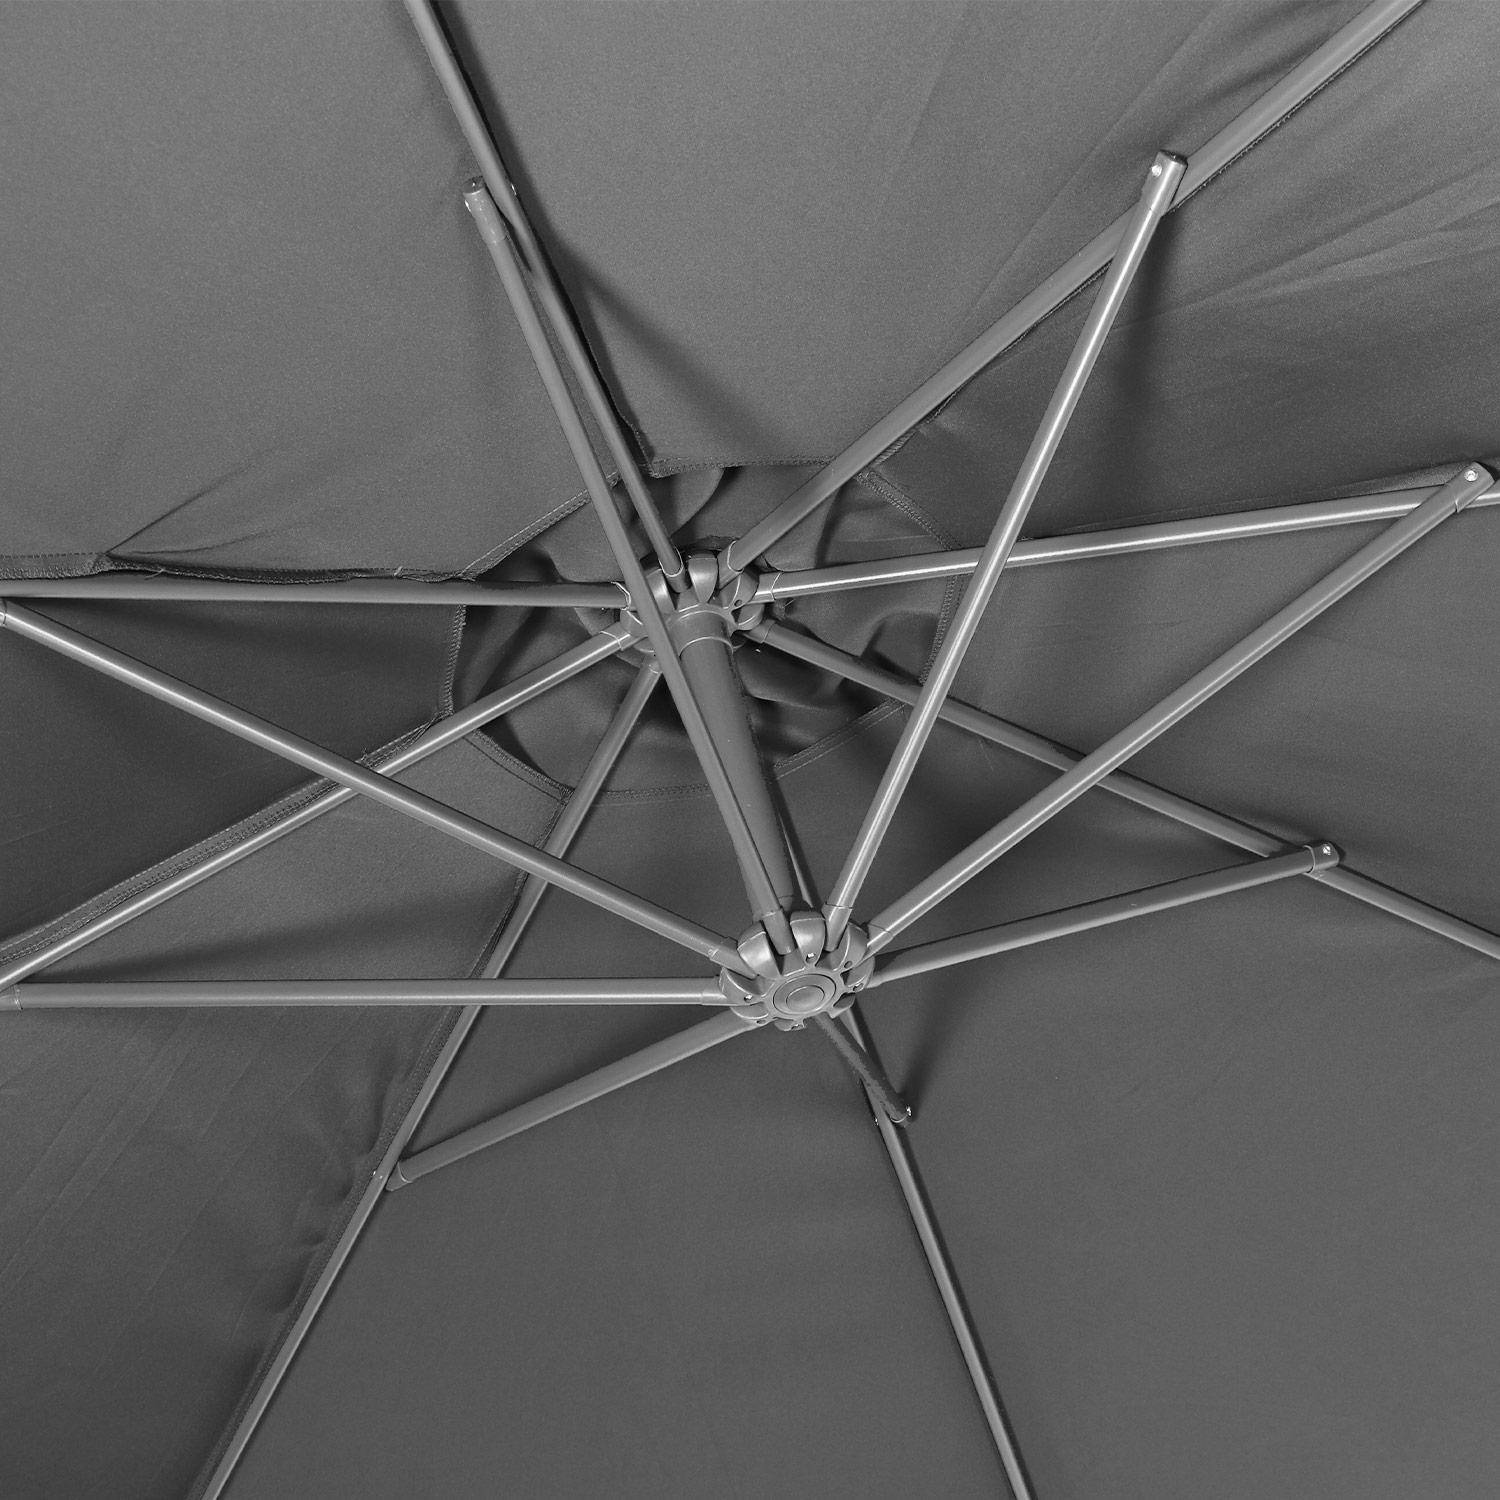 Sombrilla Ø300cm - Hardelot - Color gris, estructura antracita, manivela anti-retorno.,sweeek,Photo5